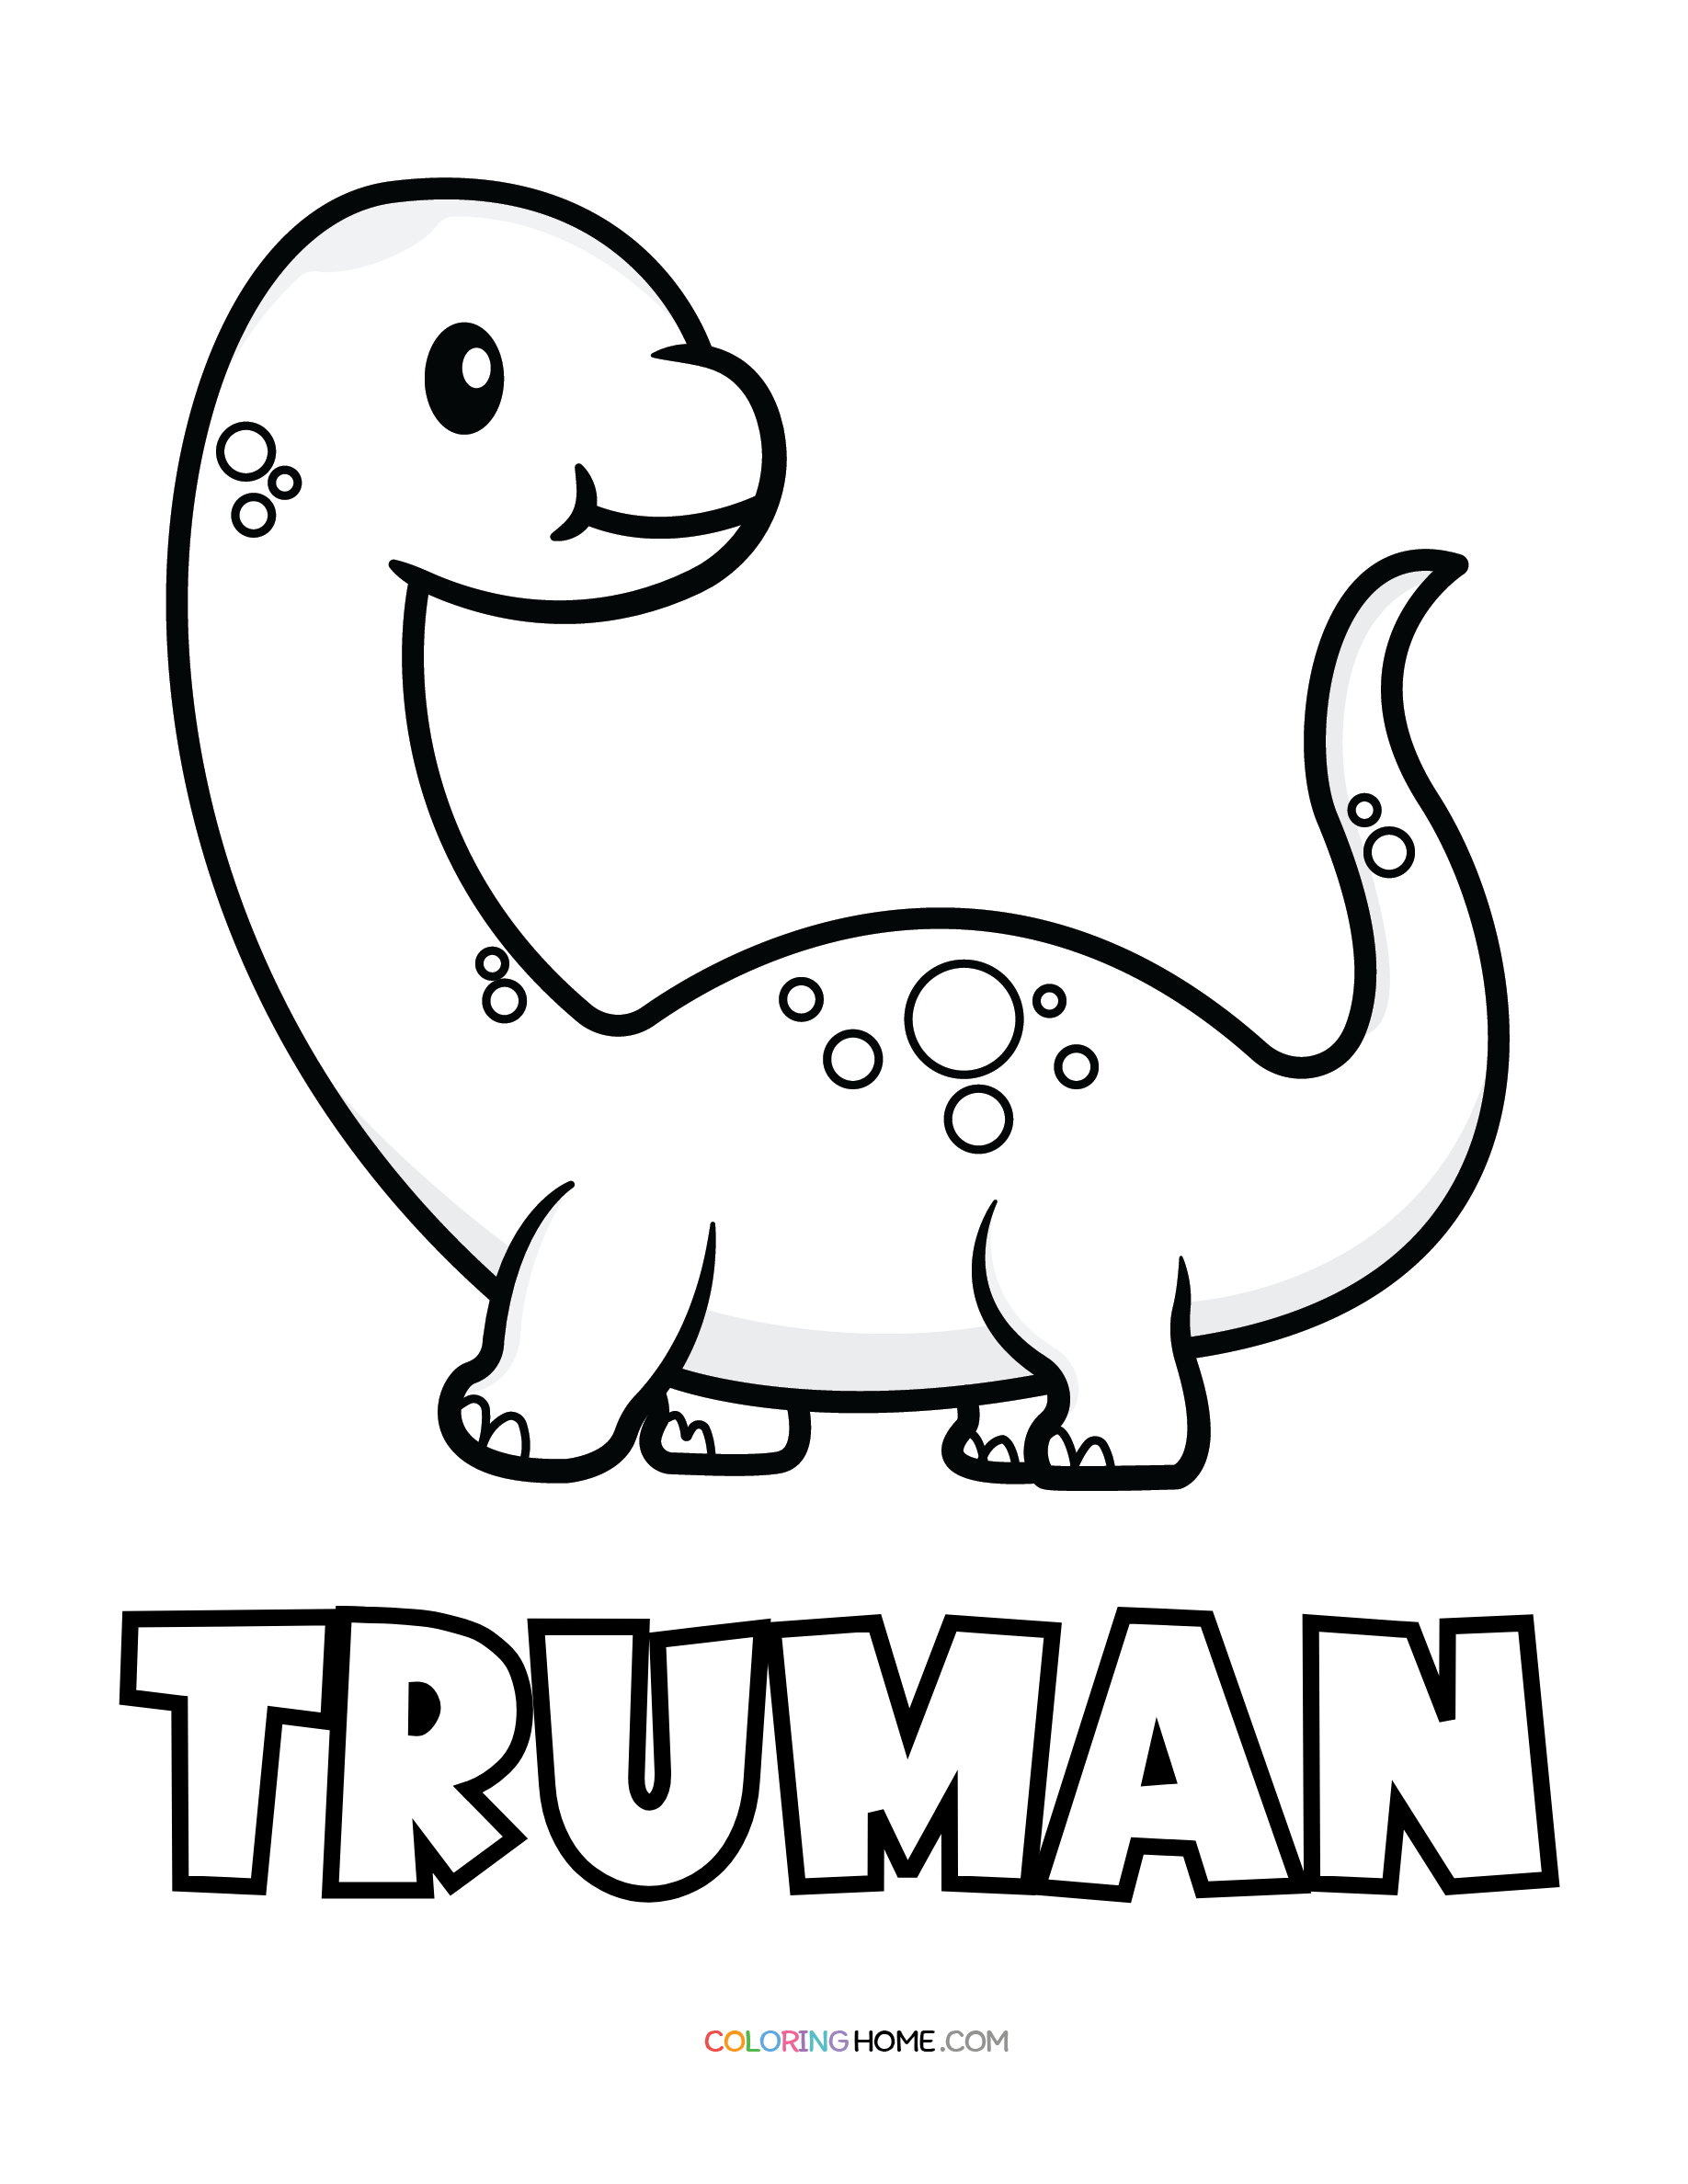 Truman dinosaur coloring page